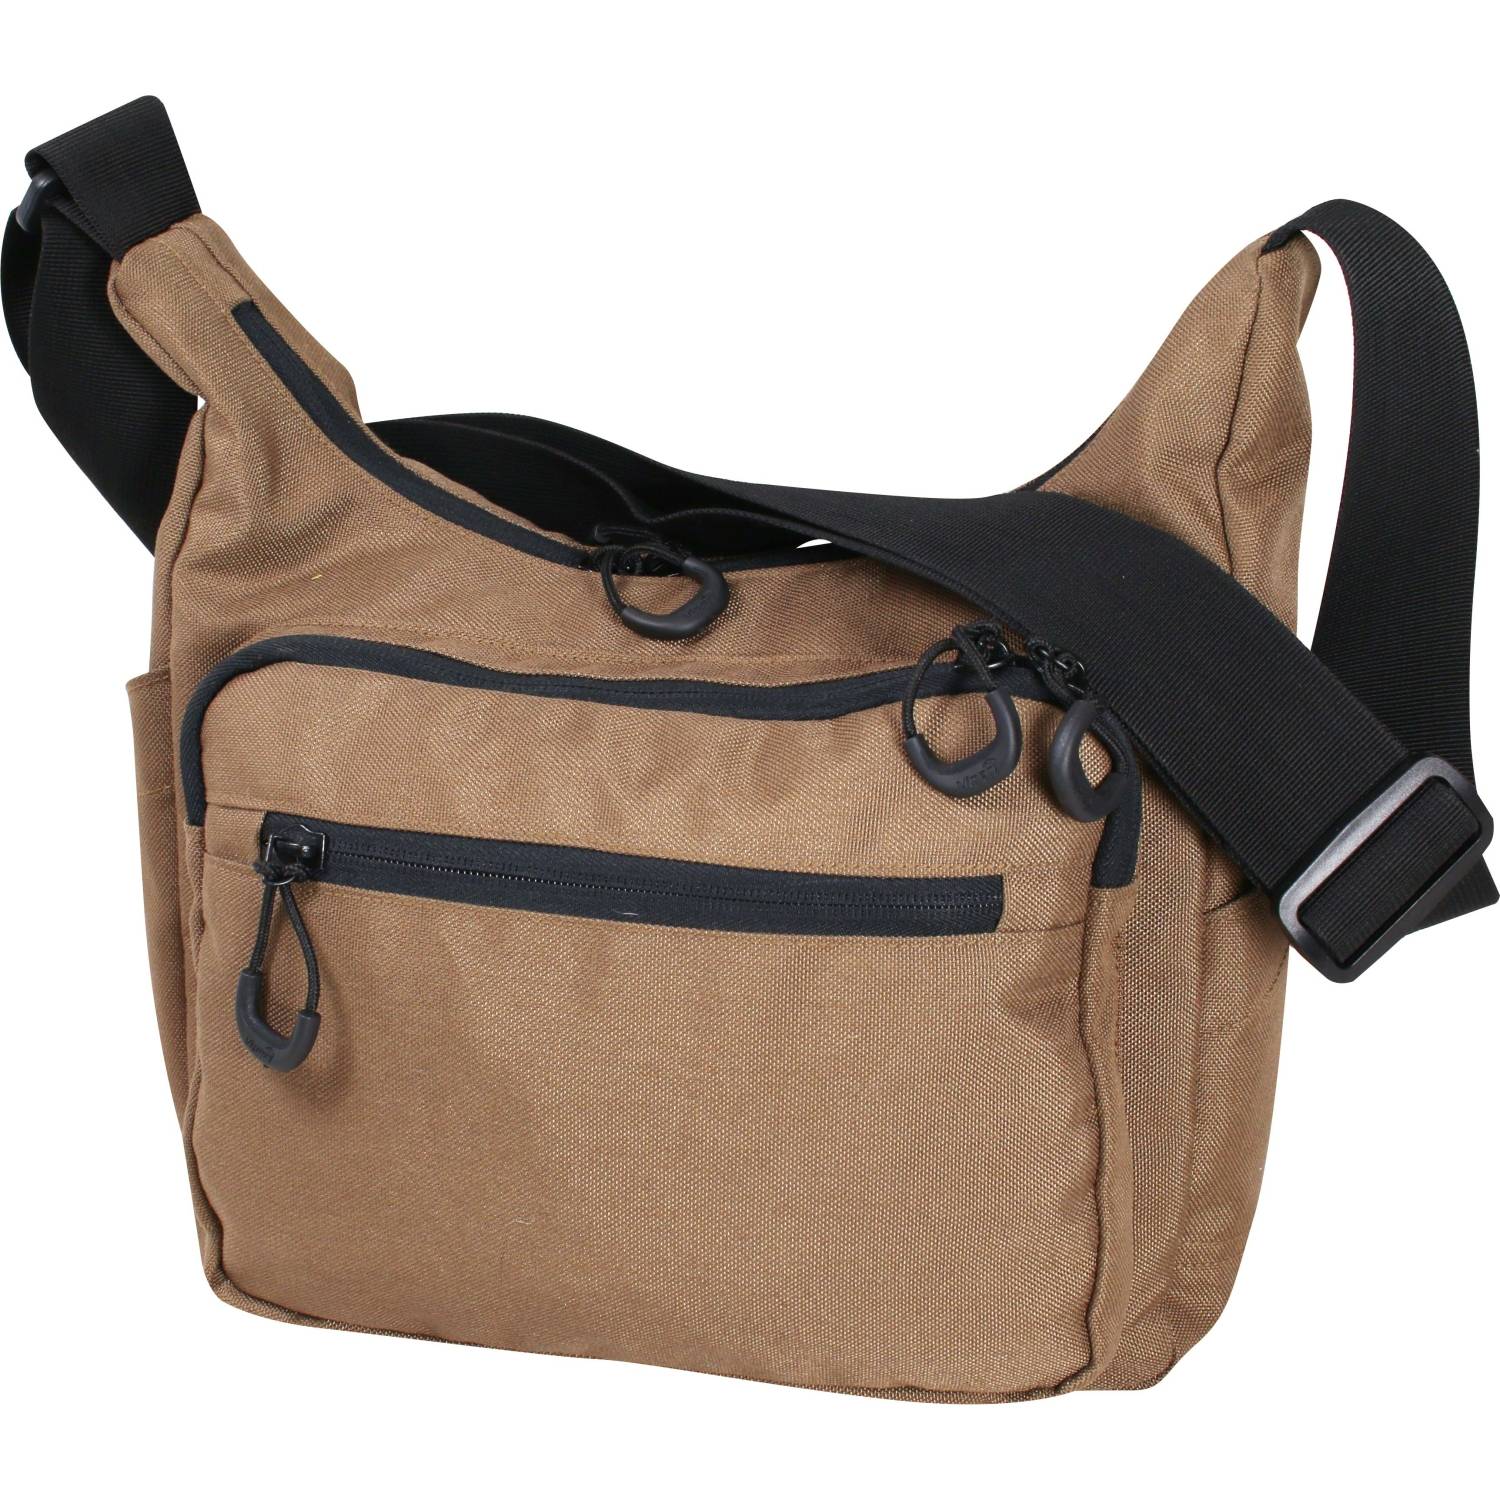 Viper Covert Shoulder Pack Mens Man Tactical Airsoft Hiking Travel Sling Bag 